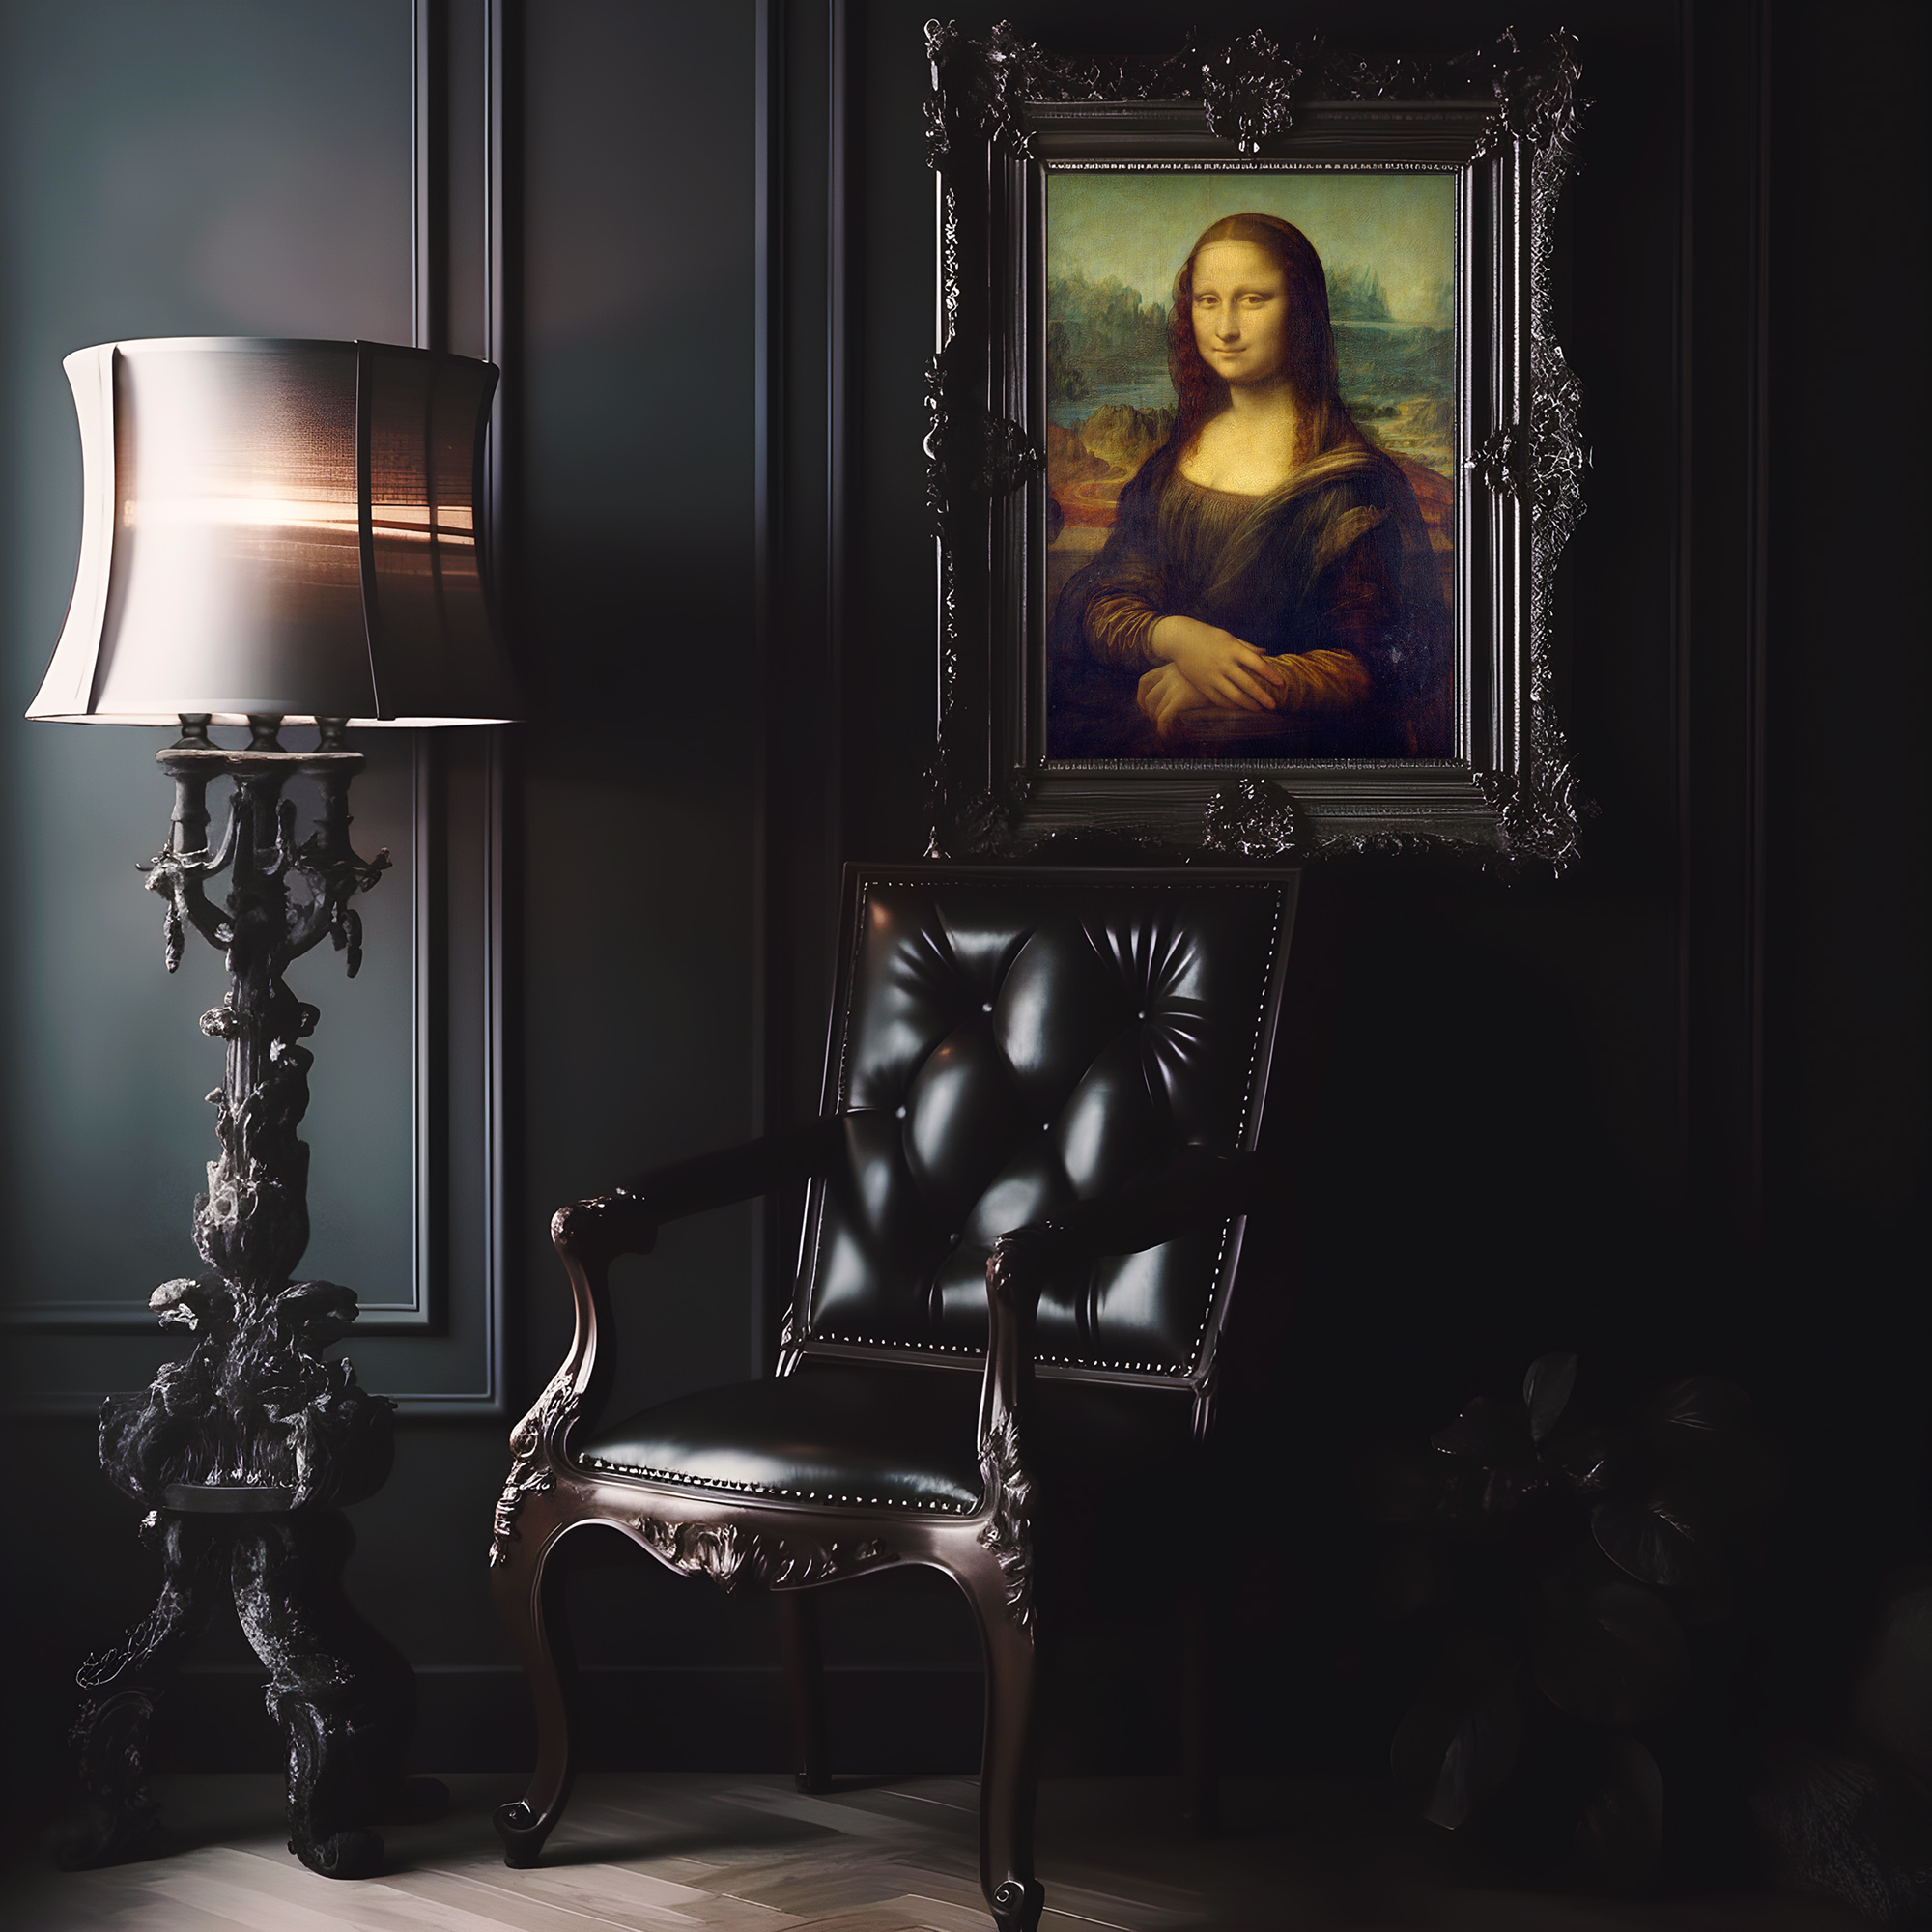 Mona Lisa by Leonardo da Vinci Canvas, Dark Academia, Gothic Art, Classic Art